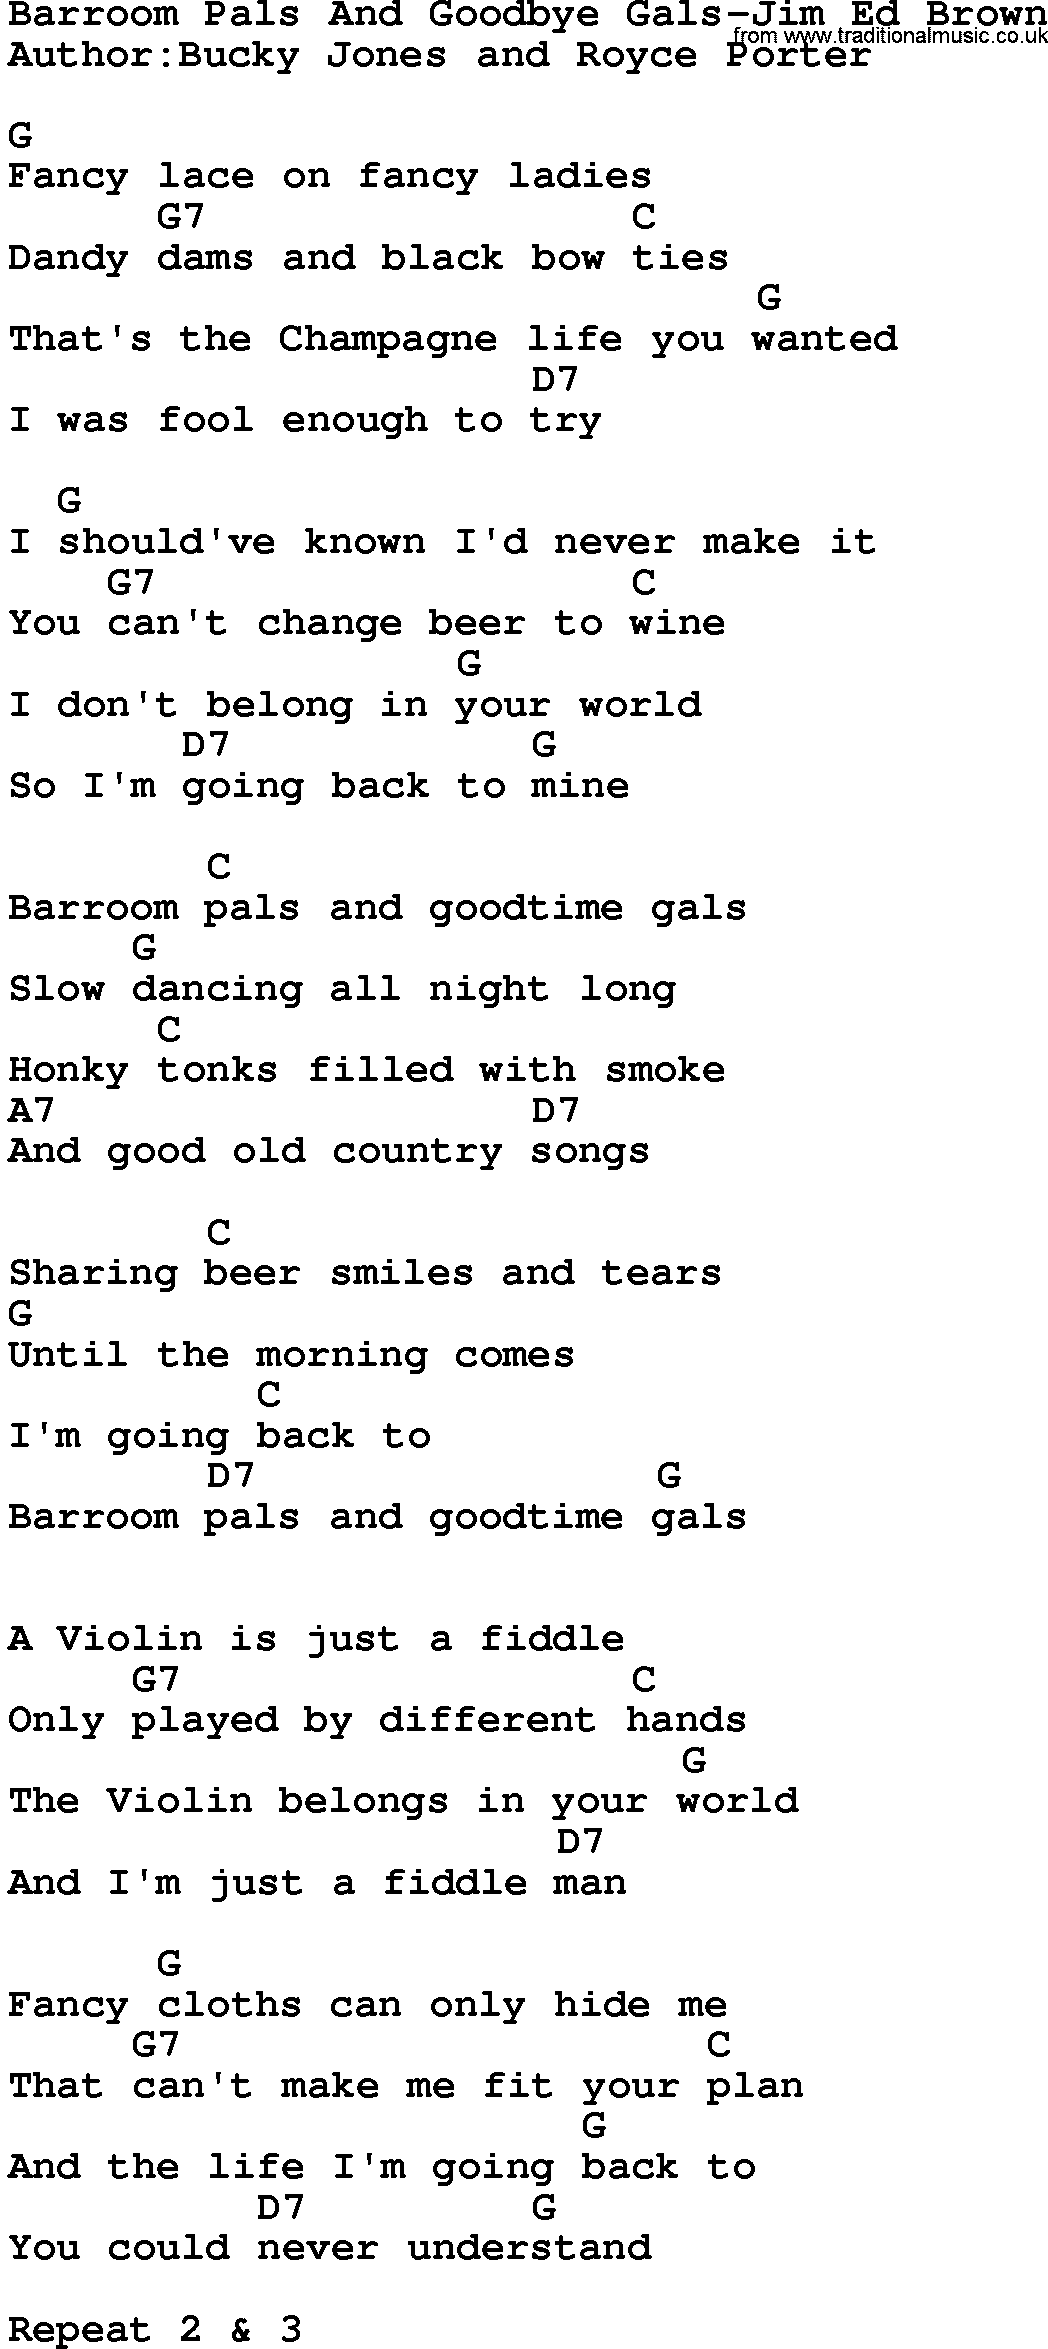 Country music song: Barroom Pals And Goodbye Gals-Jim Ed Brown lyrics and chords